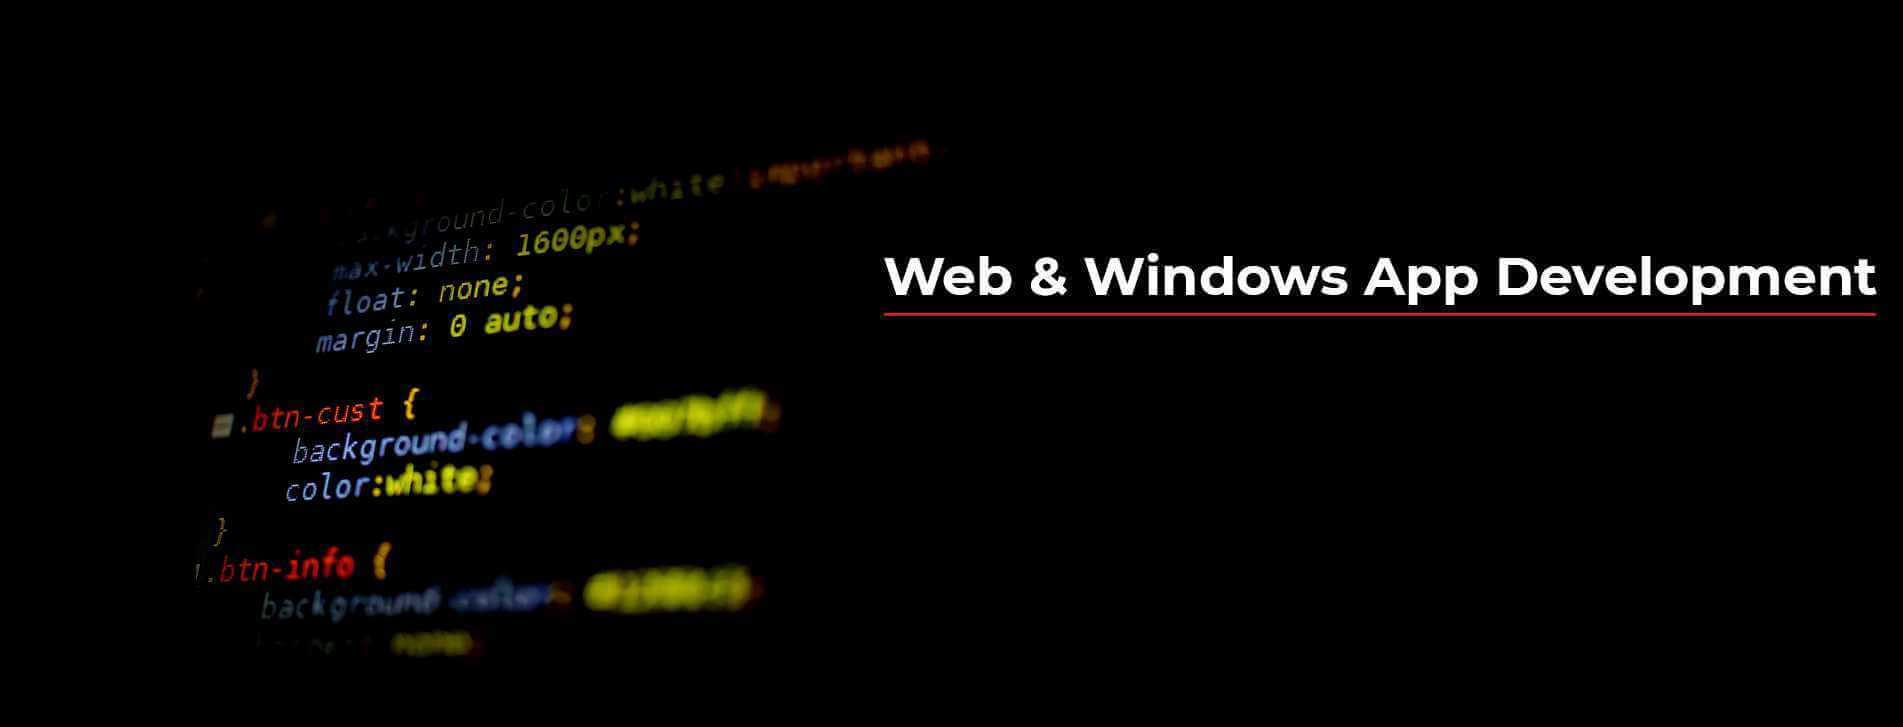 web-&-windows-app-development